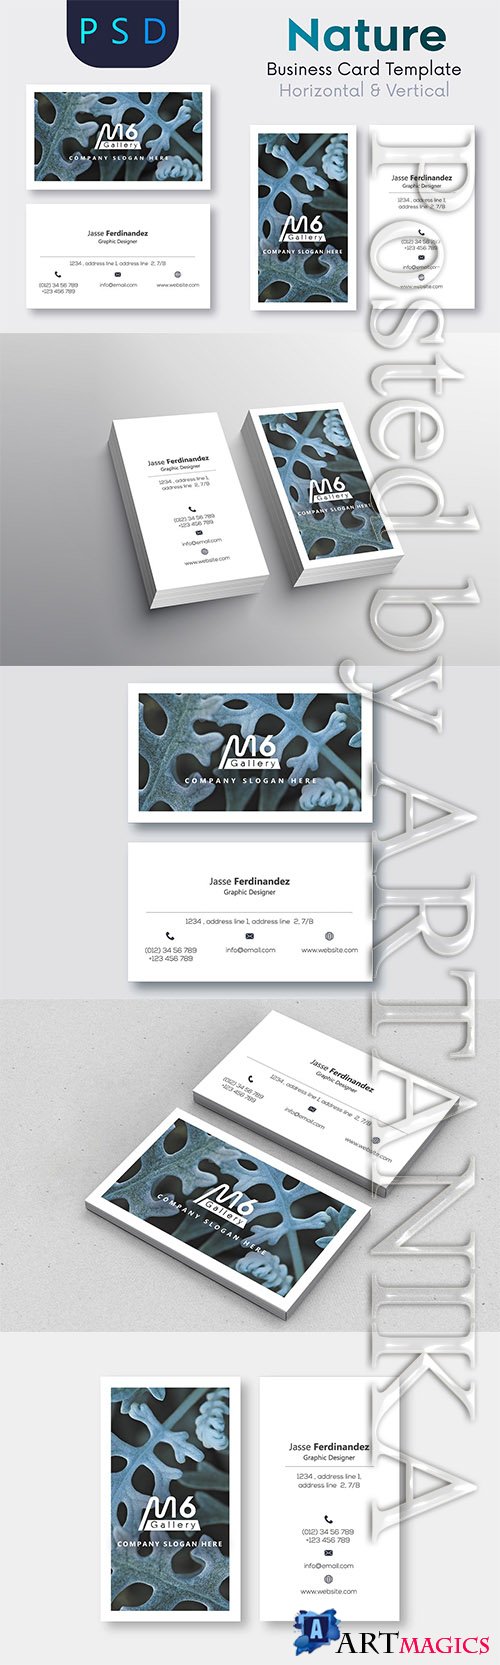 CreativeMarket - Nature Business Card Template - S50 2218864